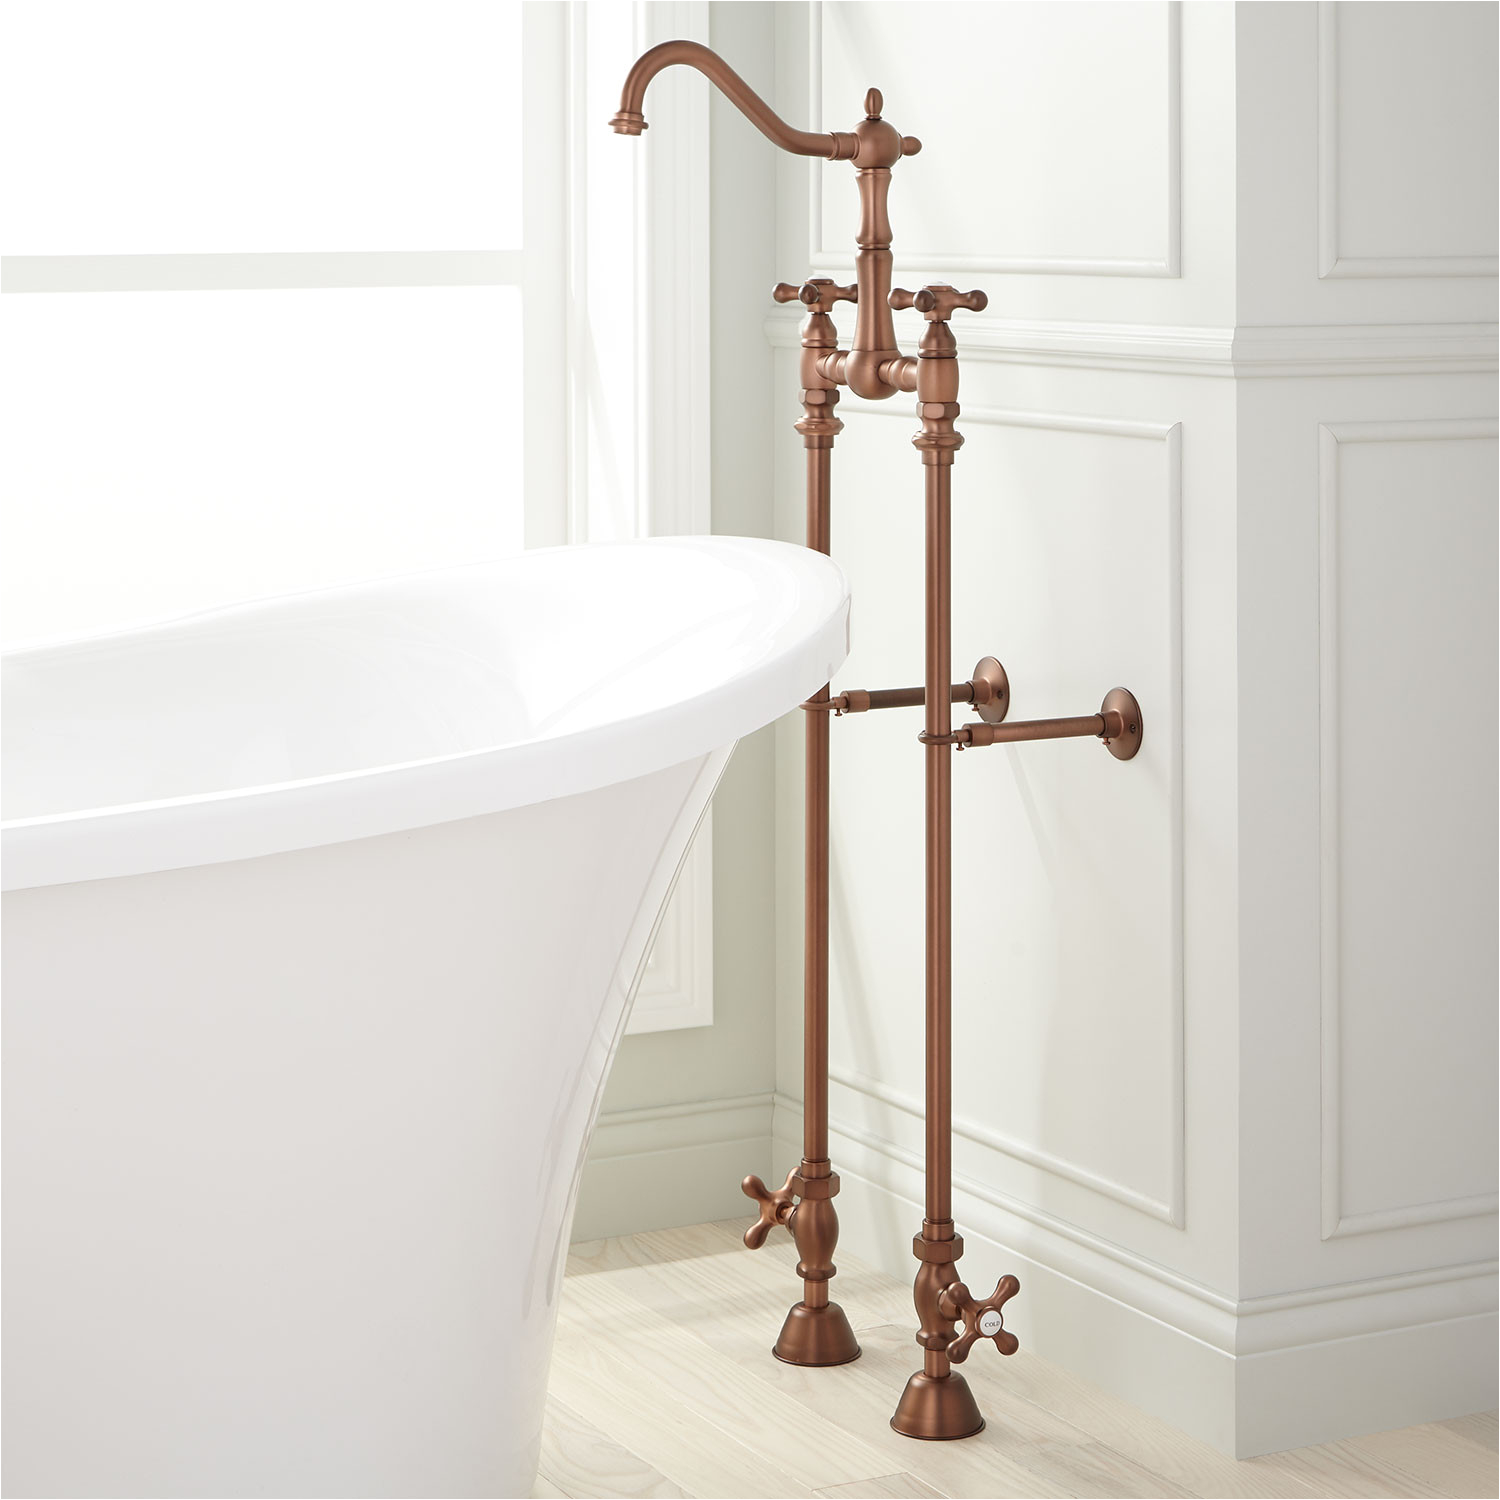 classic victorian gooseneck tub faucet supplies with shutoff valves cross handles